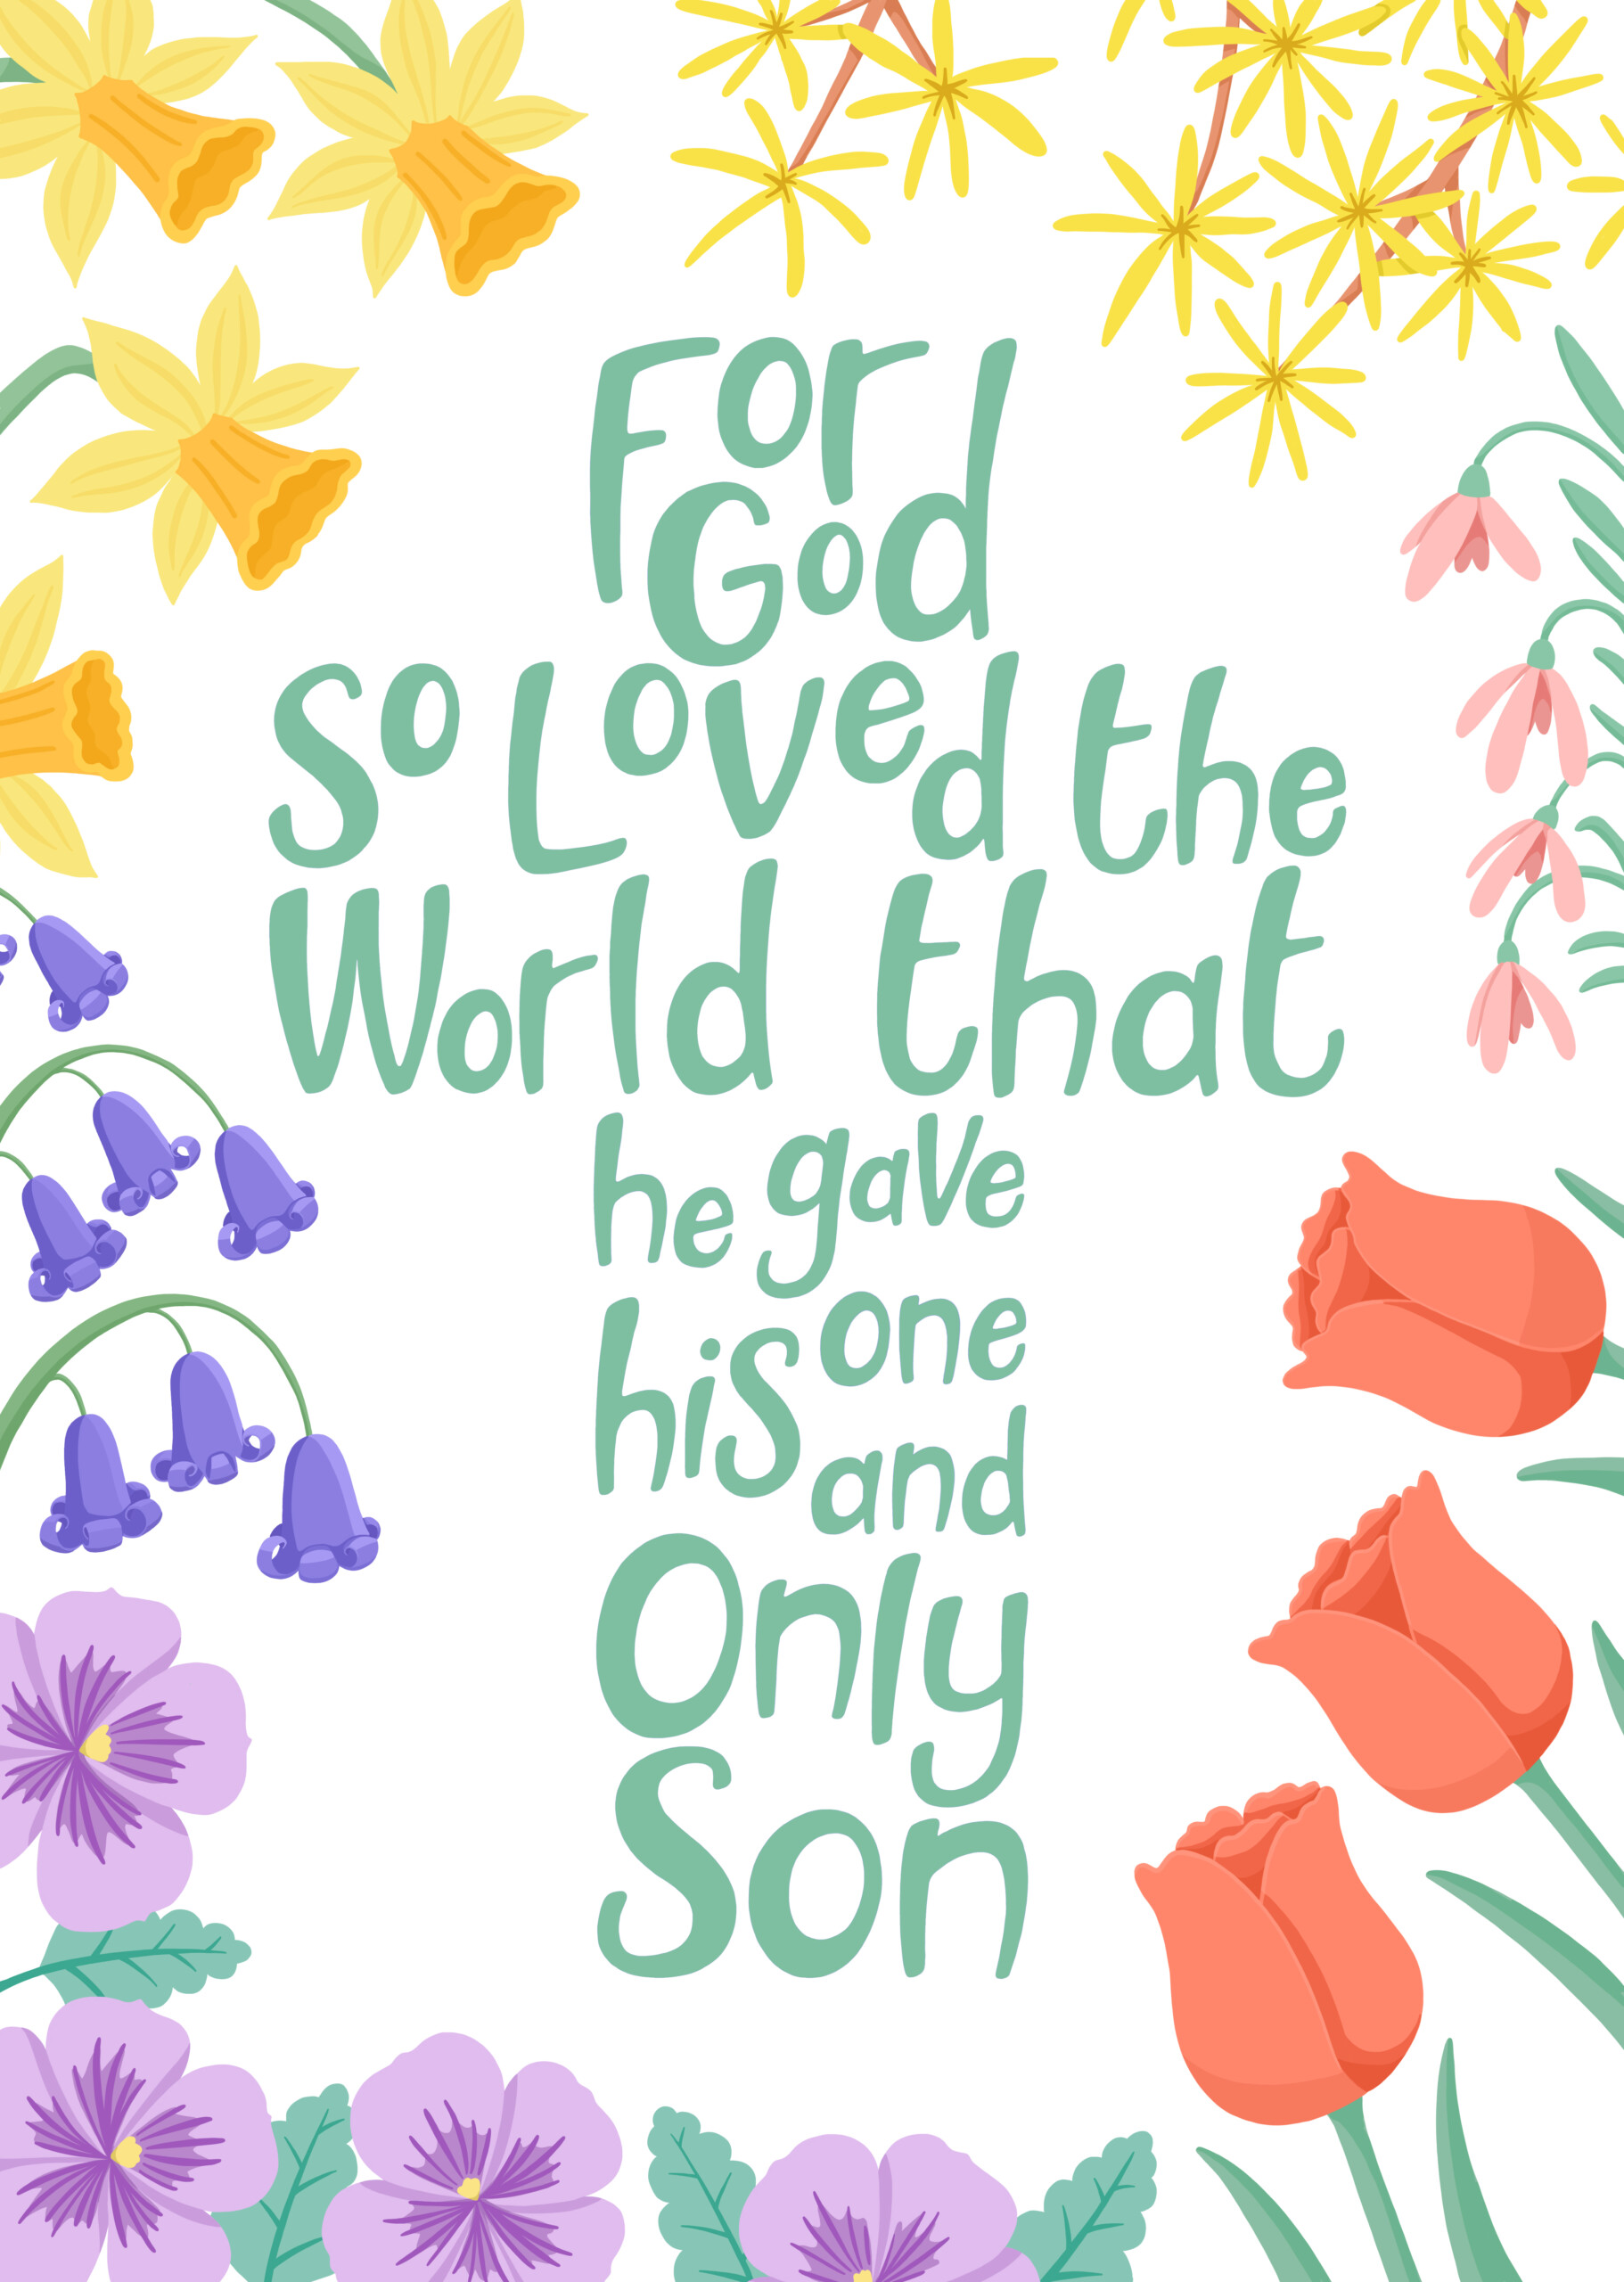 For God so loved the world - Easter image